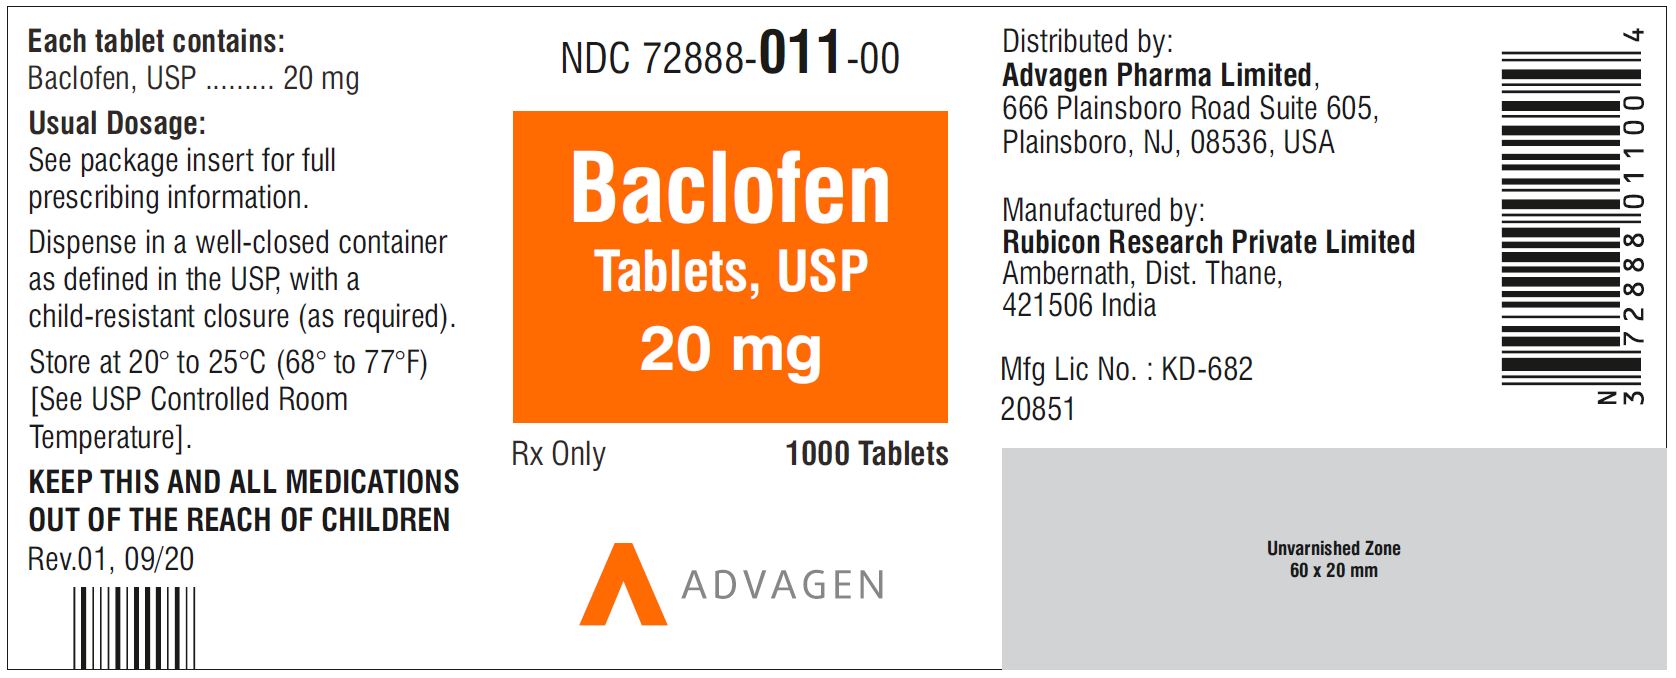 NDC 72888-011-00 - Baclofen Tablets, USP 20 mg - 1000 Tablets